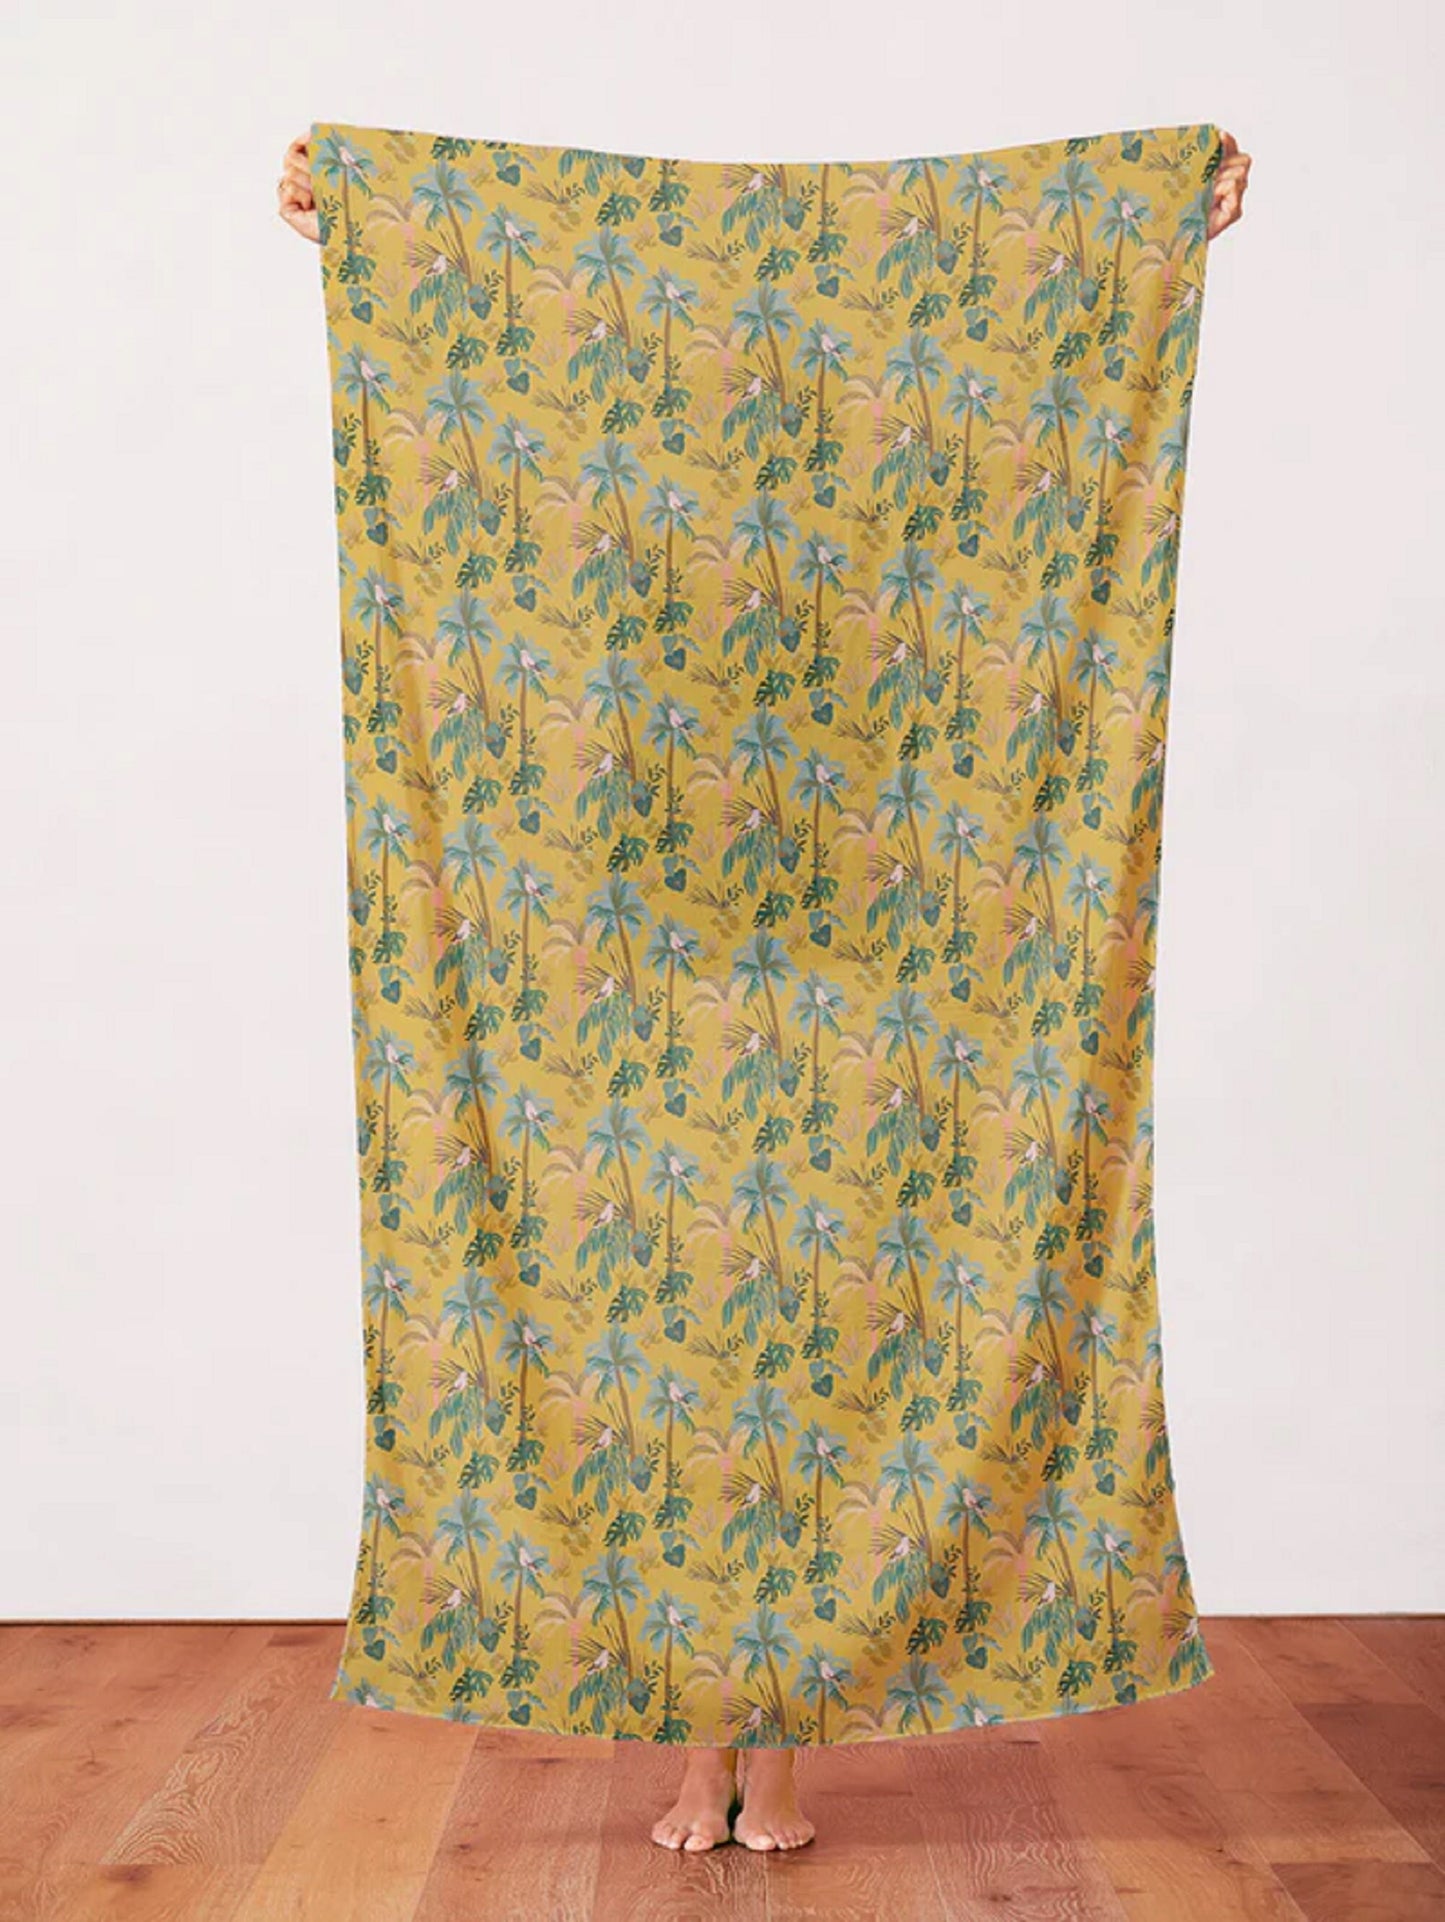 Jungle Bird Chartreuse - Moroccan Sunrise - Teresa Chan - Paintbrush Studio Fabric 100% ORGANIC Cotton CANVAS